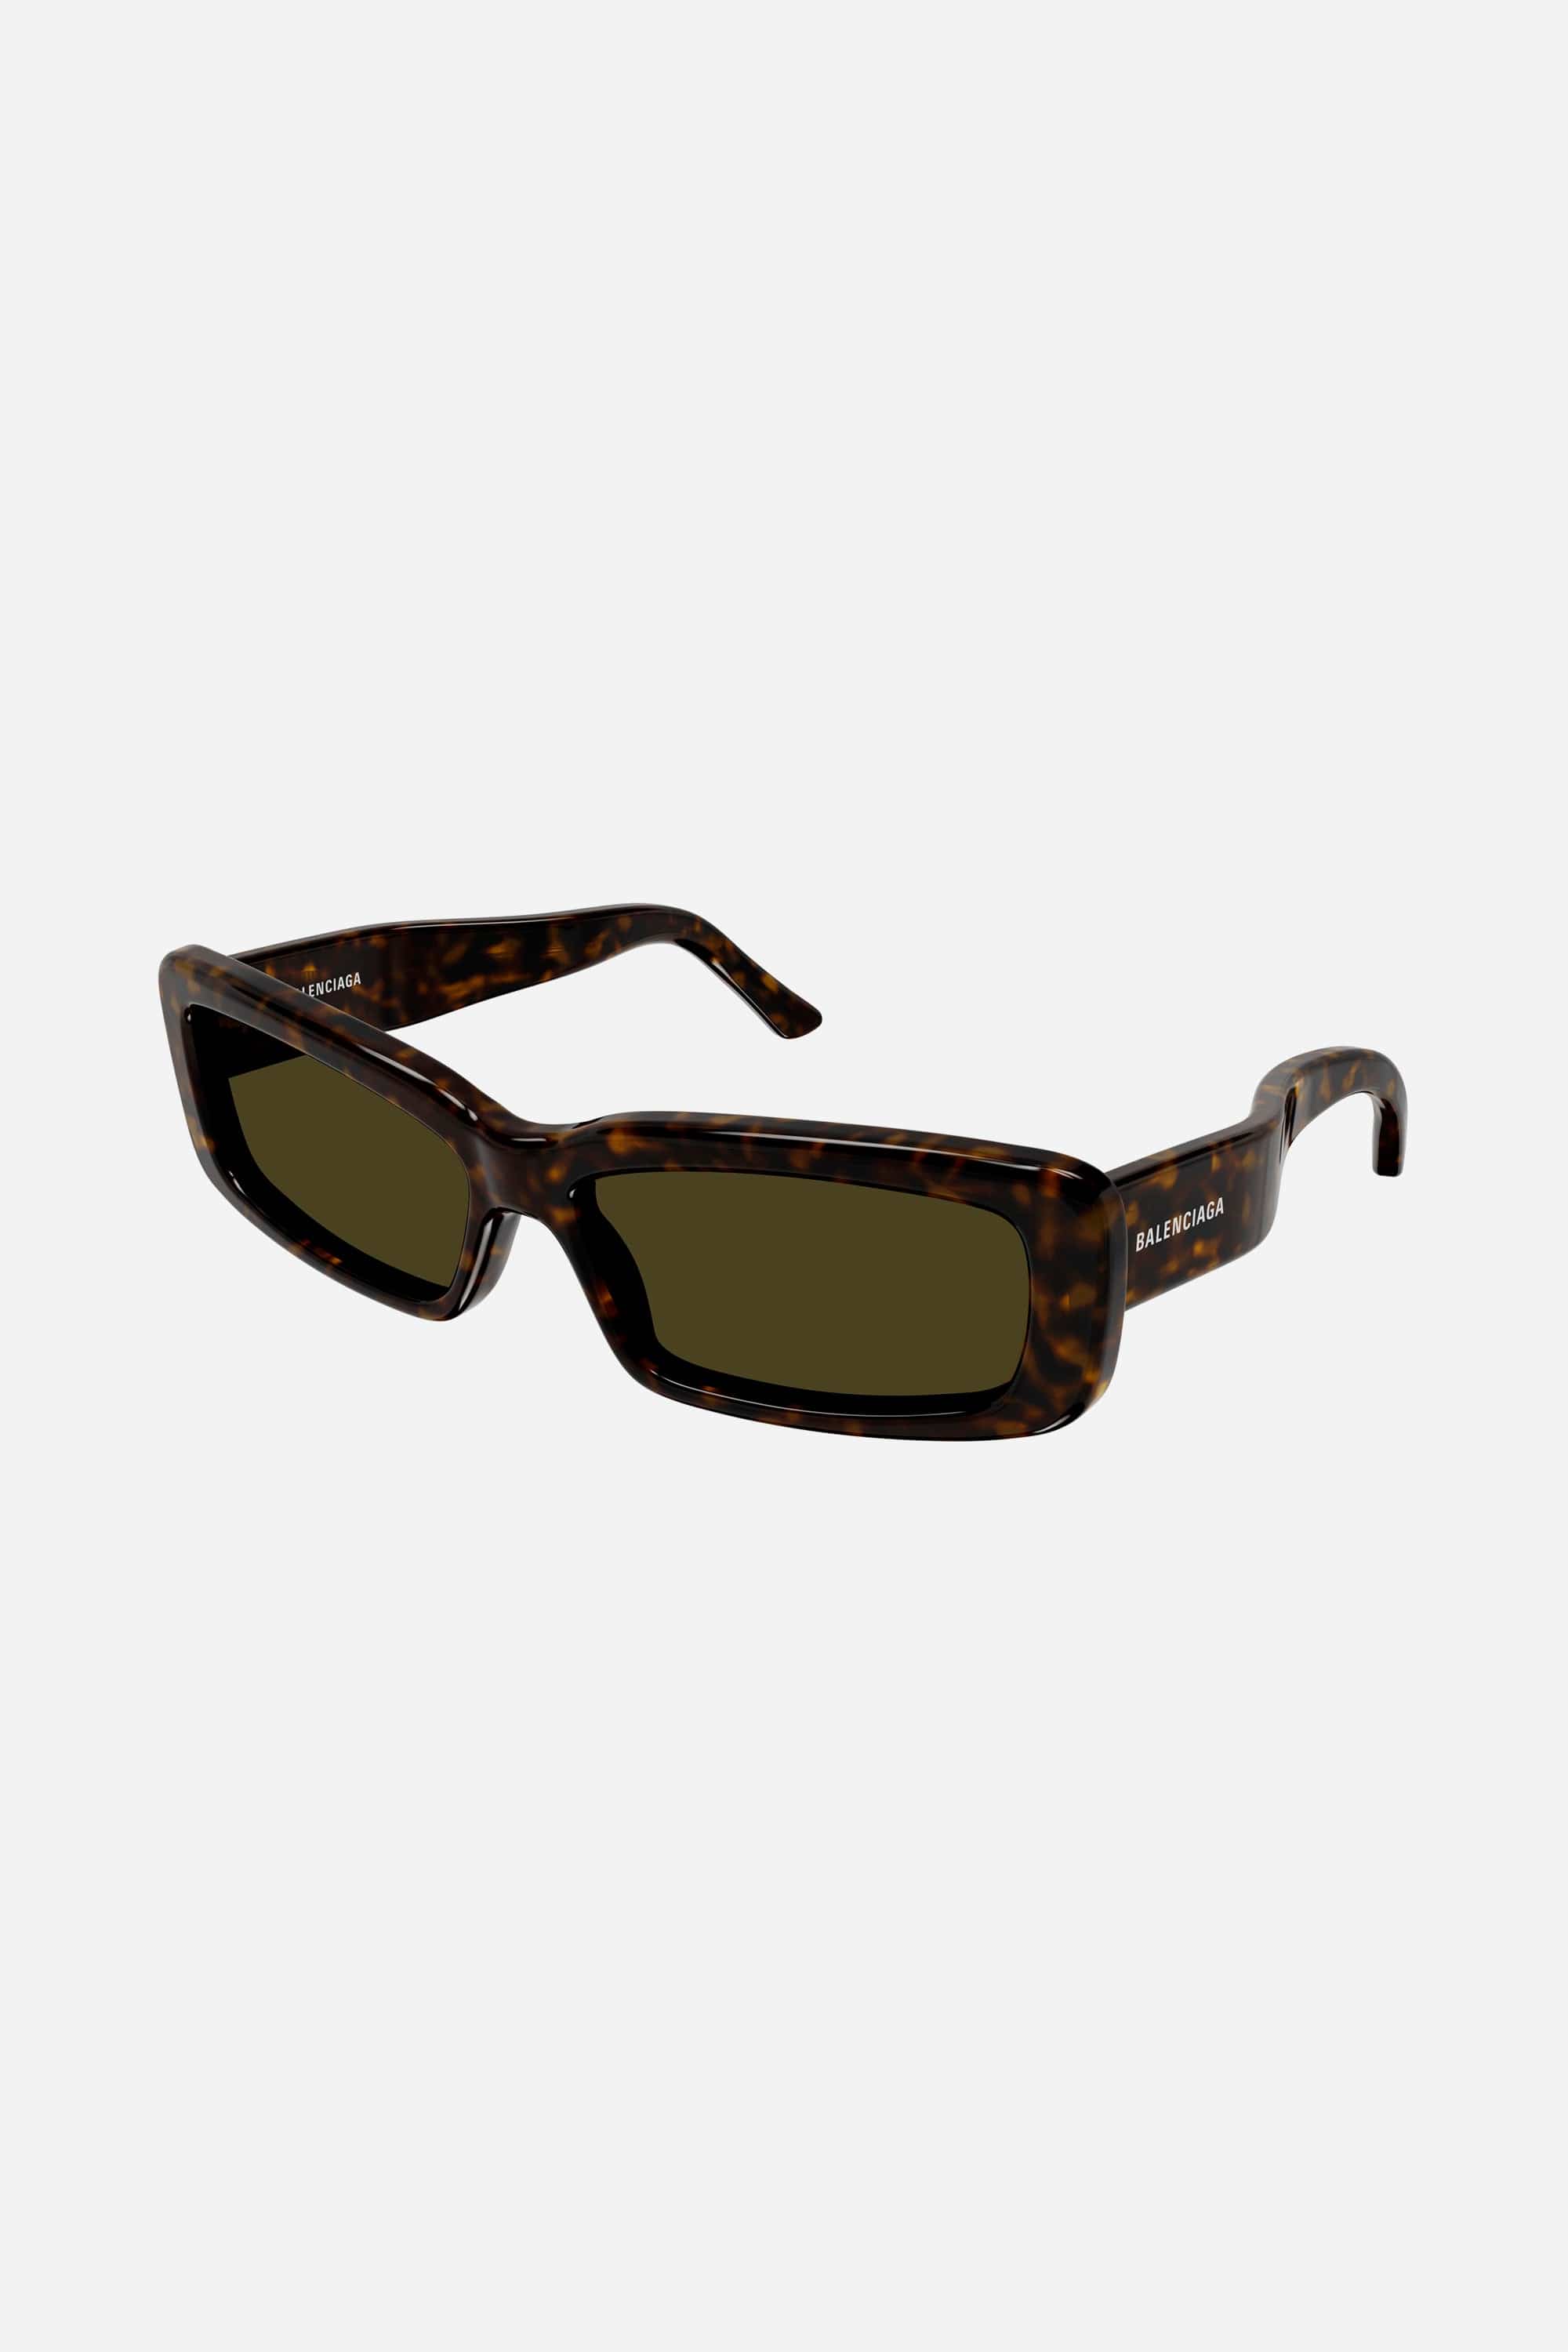 Balenciaga oversize rectangle sunglasses in havana - Eyewear Club